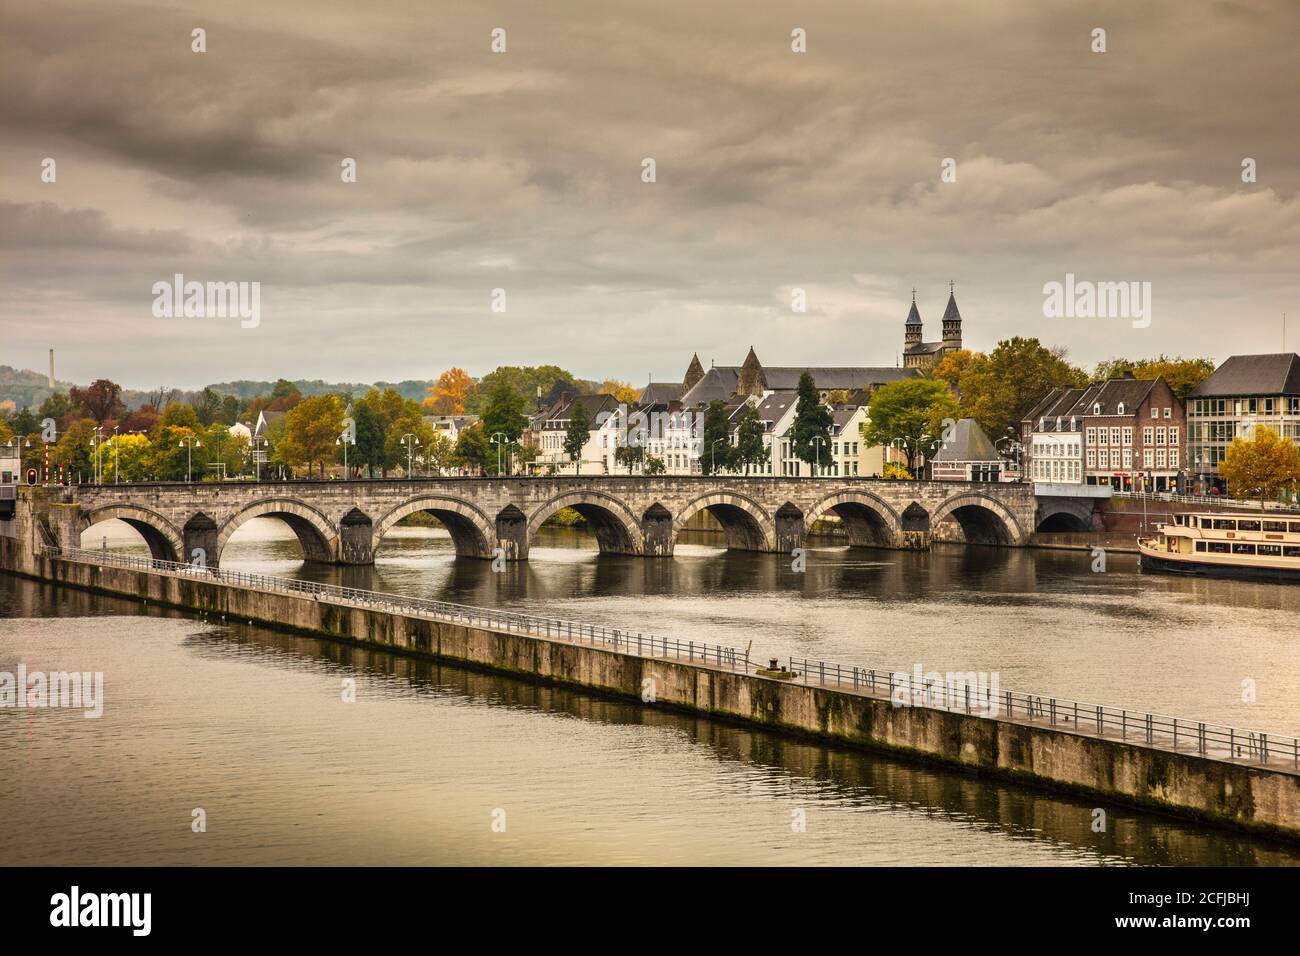 Paesi Bassi. Maastricht. Fiume chiamato Maas. Ponte chiamato Sint Servaas. Skyline. Autunno. Foto Stock